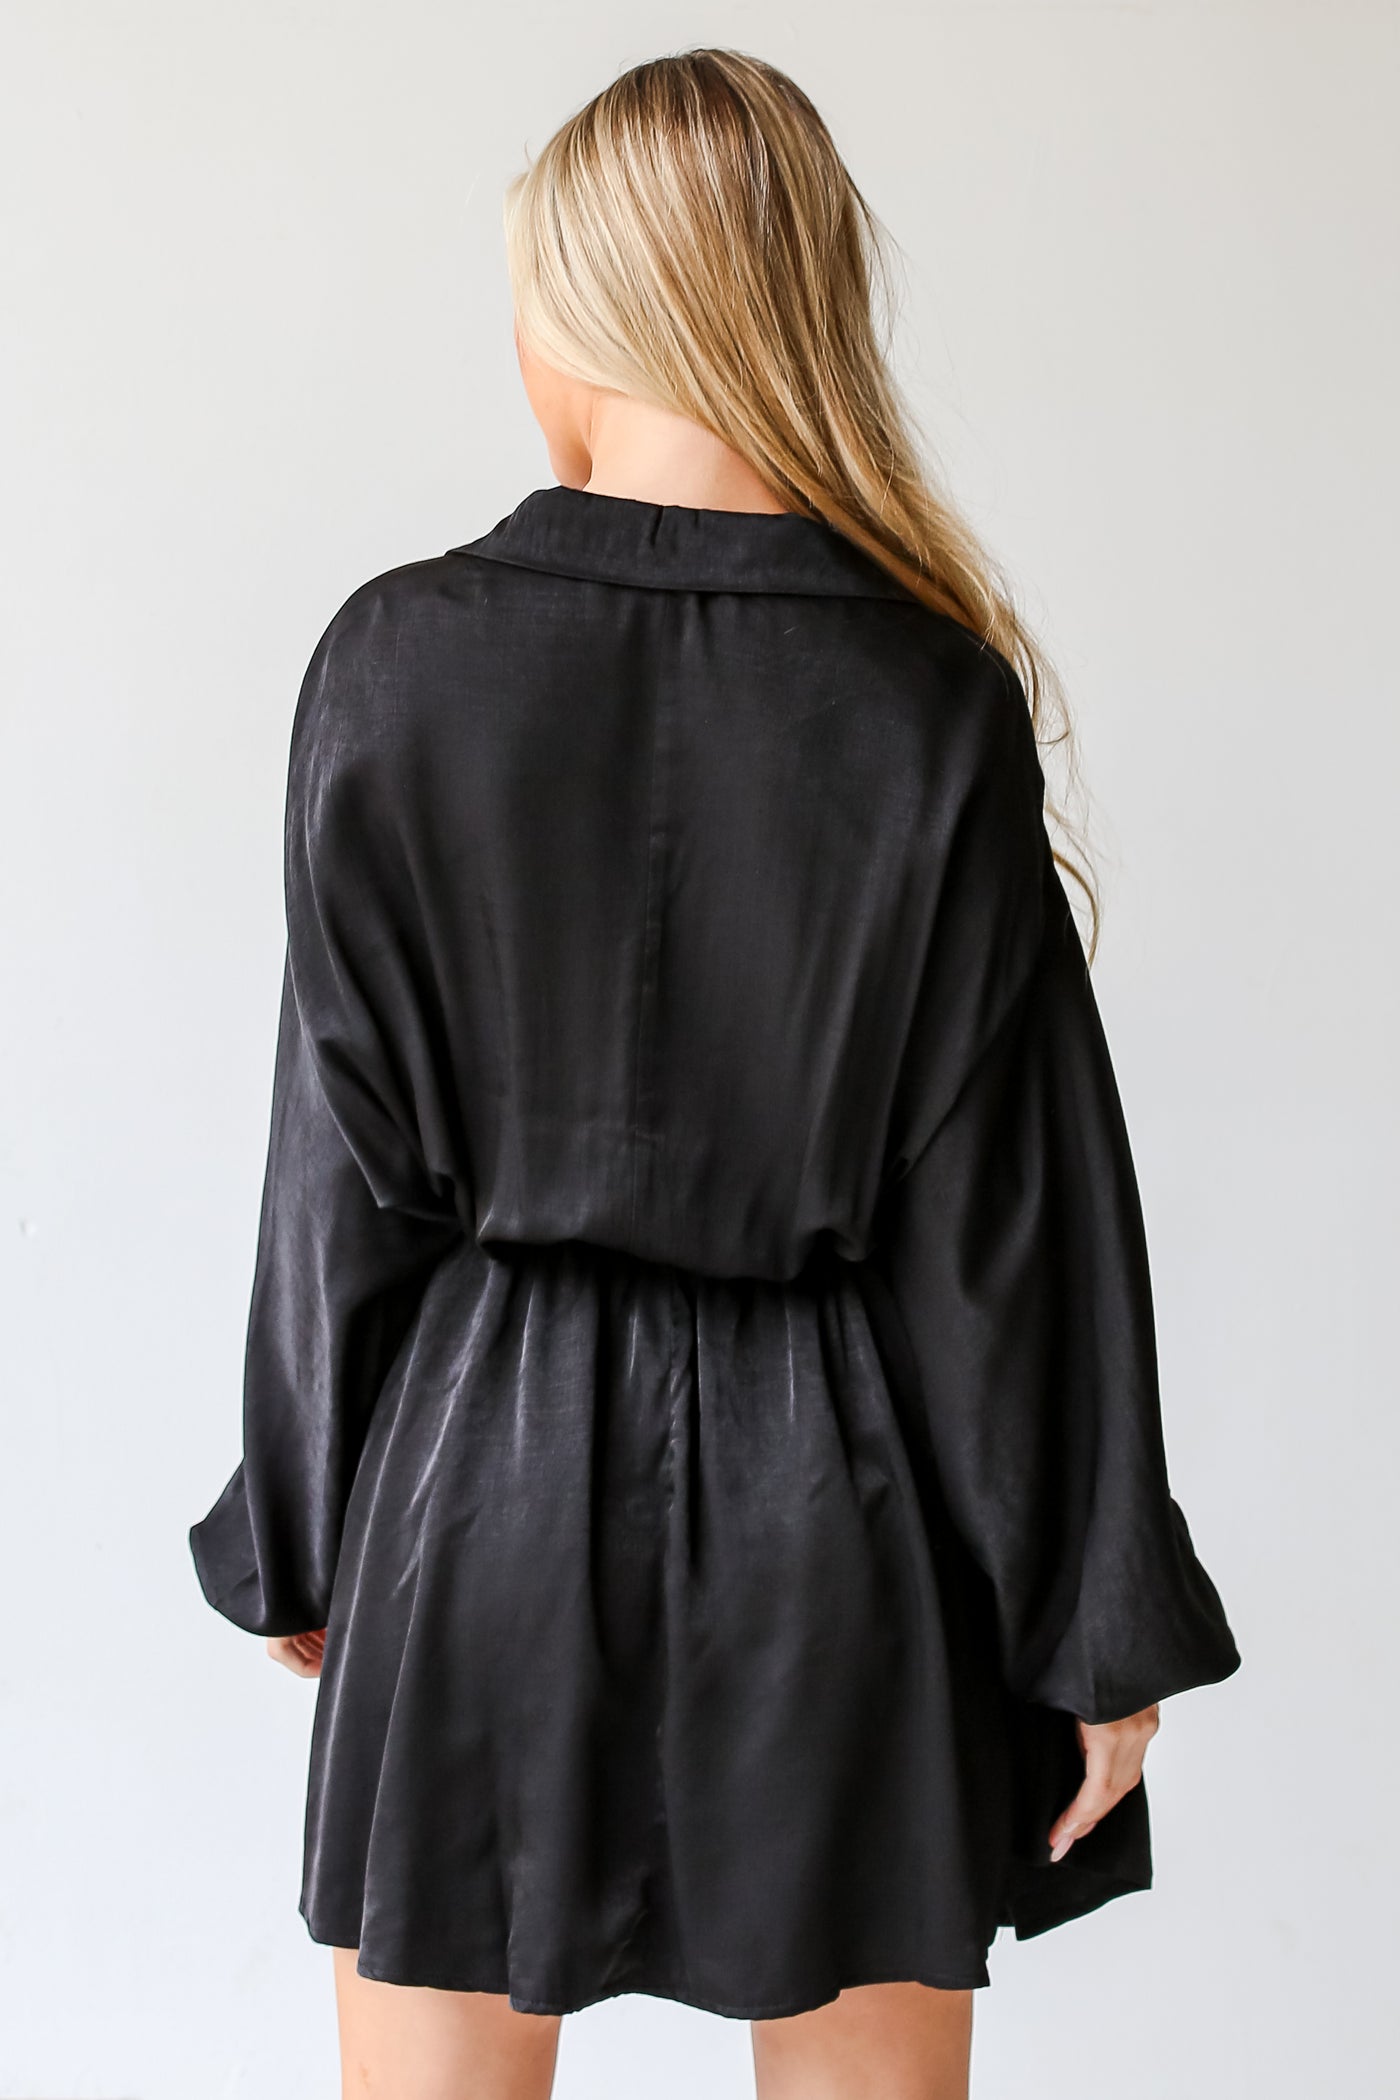 black satin long sleeve dress